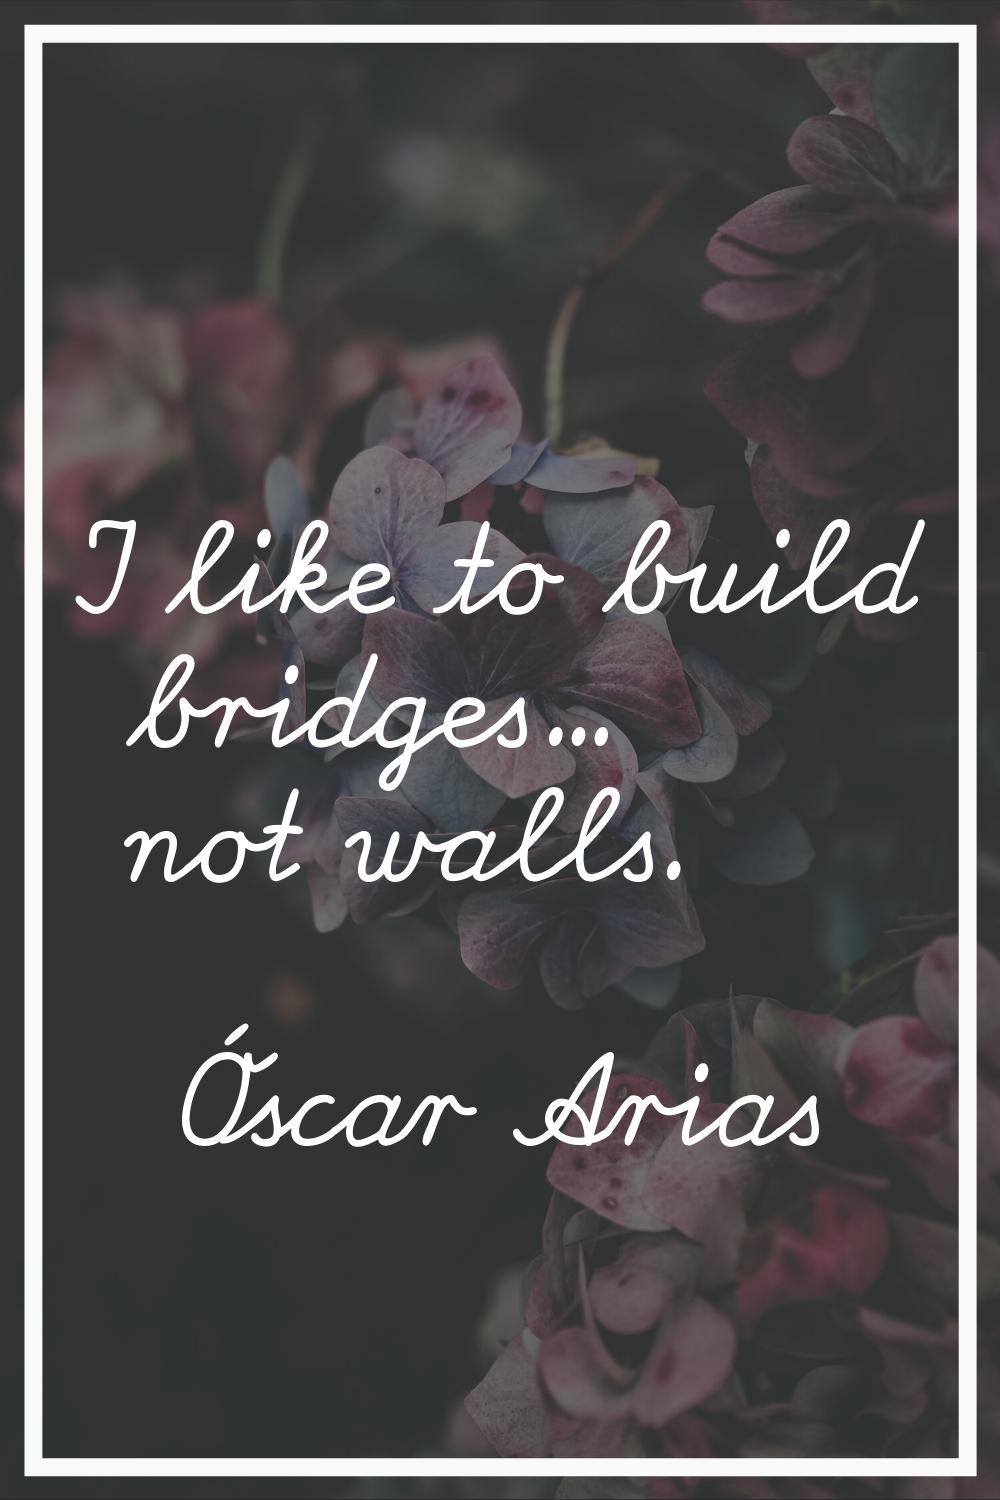 I like to build bridges... not walls.